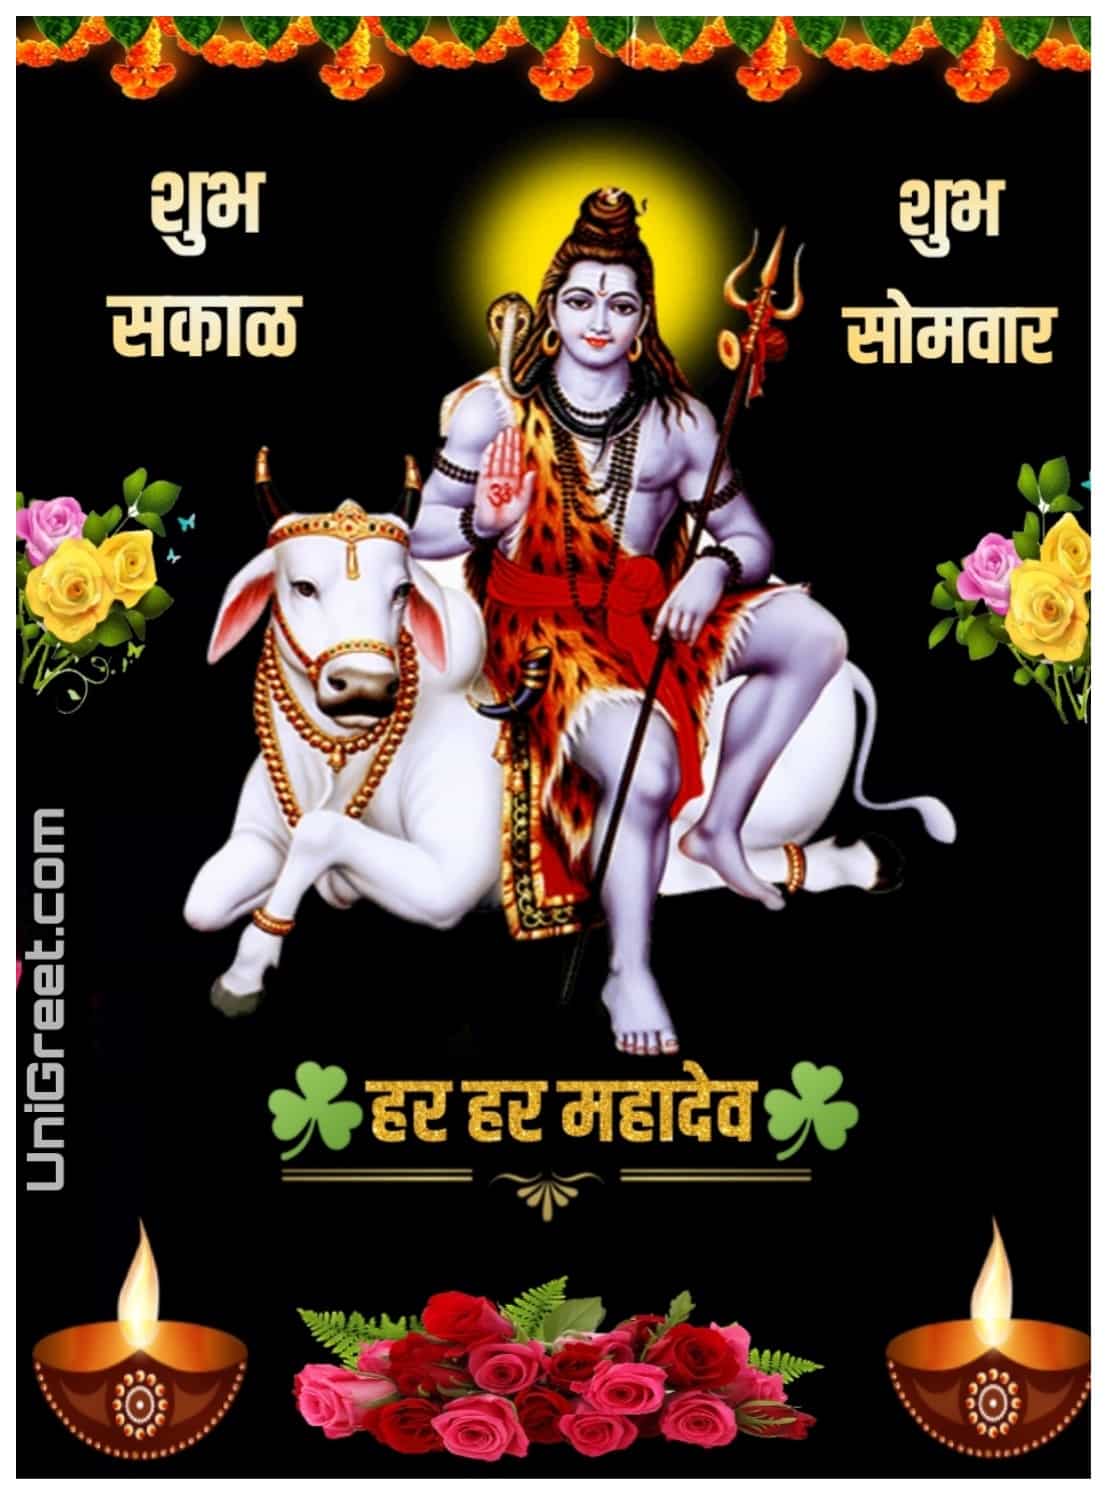 Shubh Somvar image download